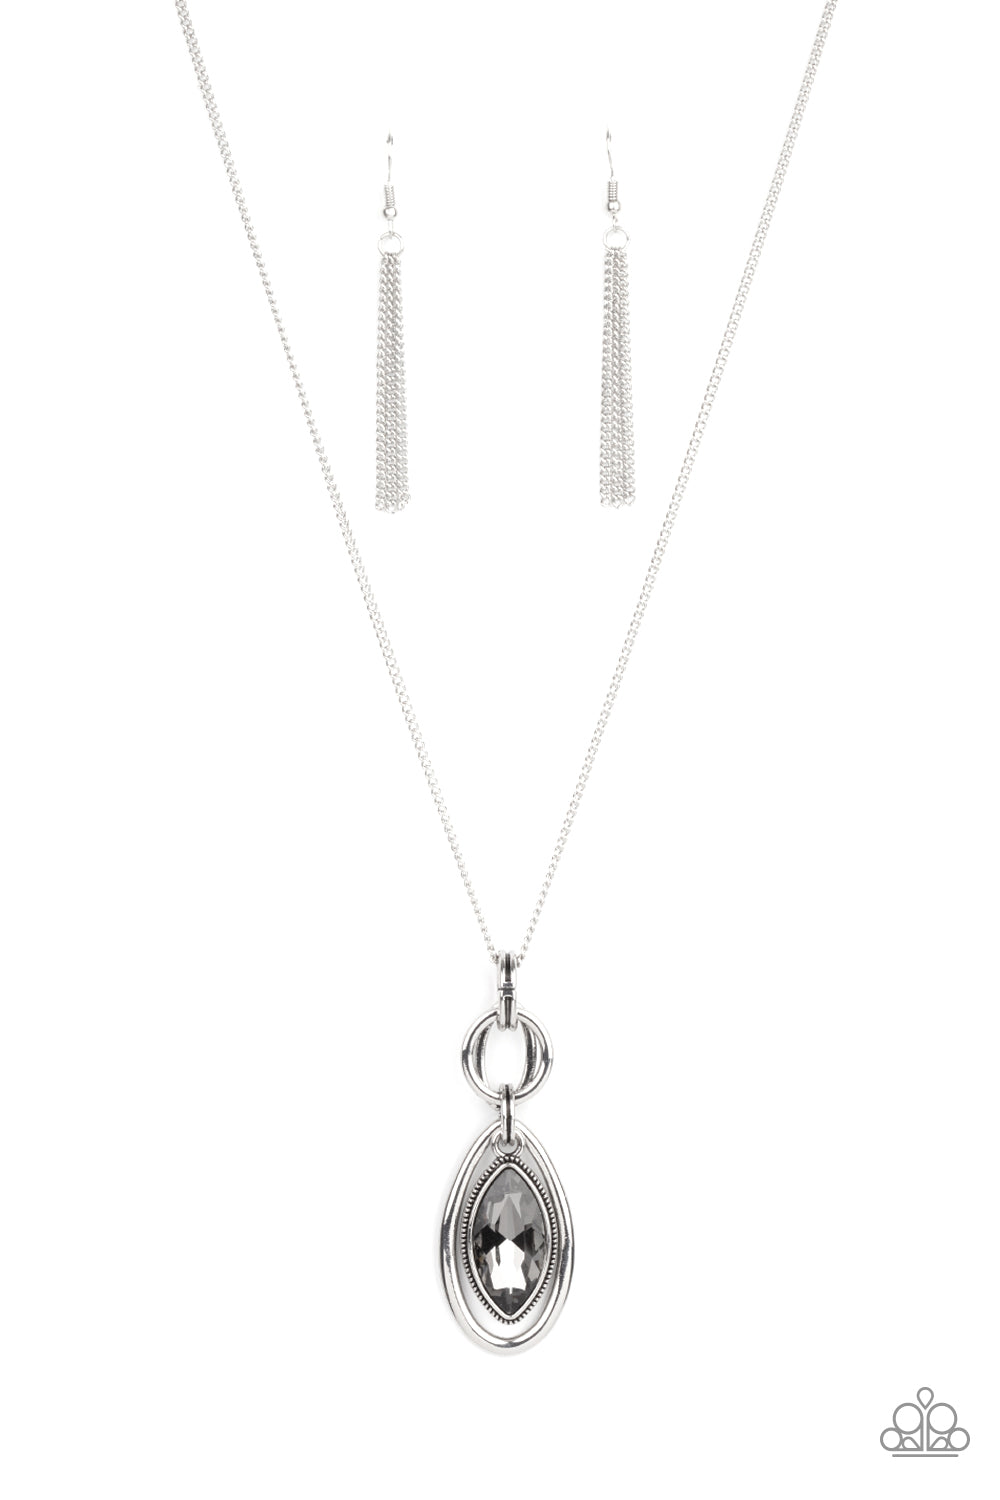 Paparazzi Glamorously Glaring - Silver Necklace - A Finishing Touch Jewelry